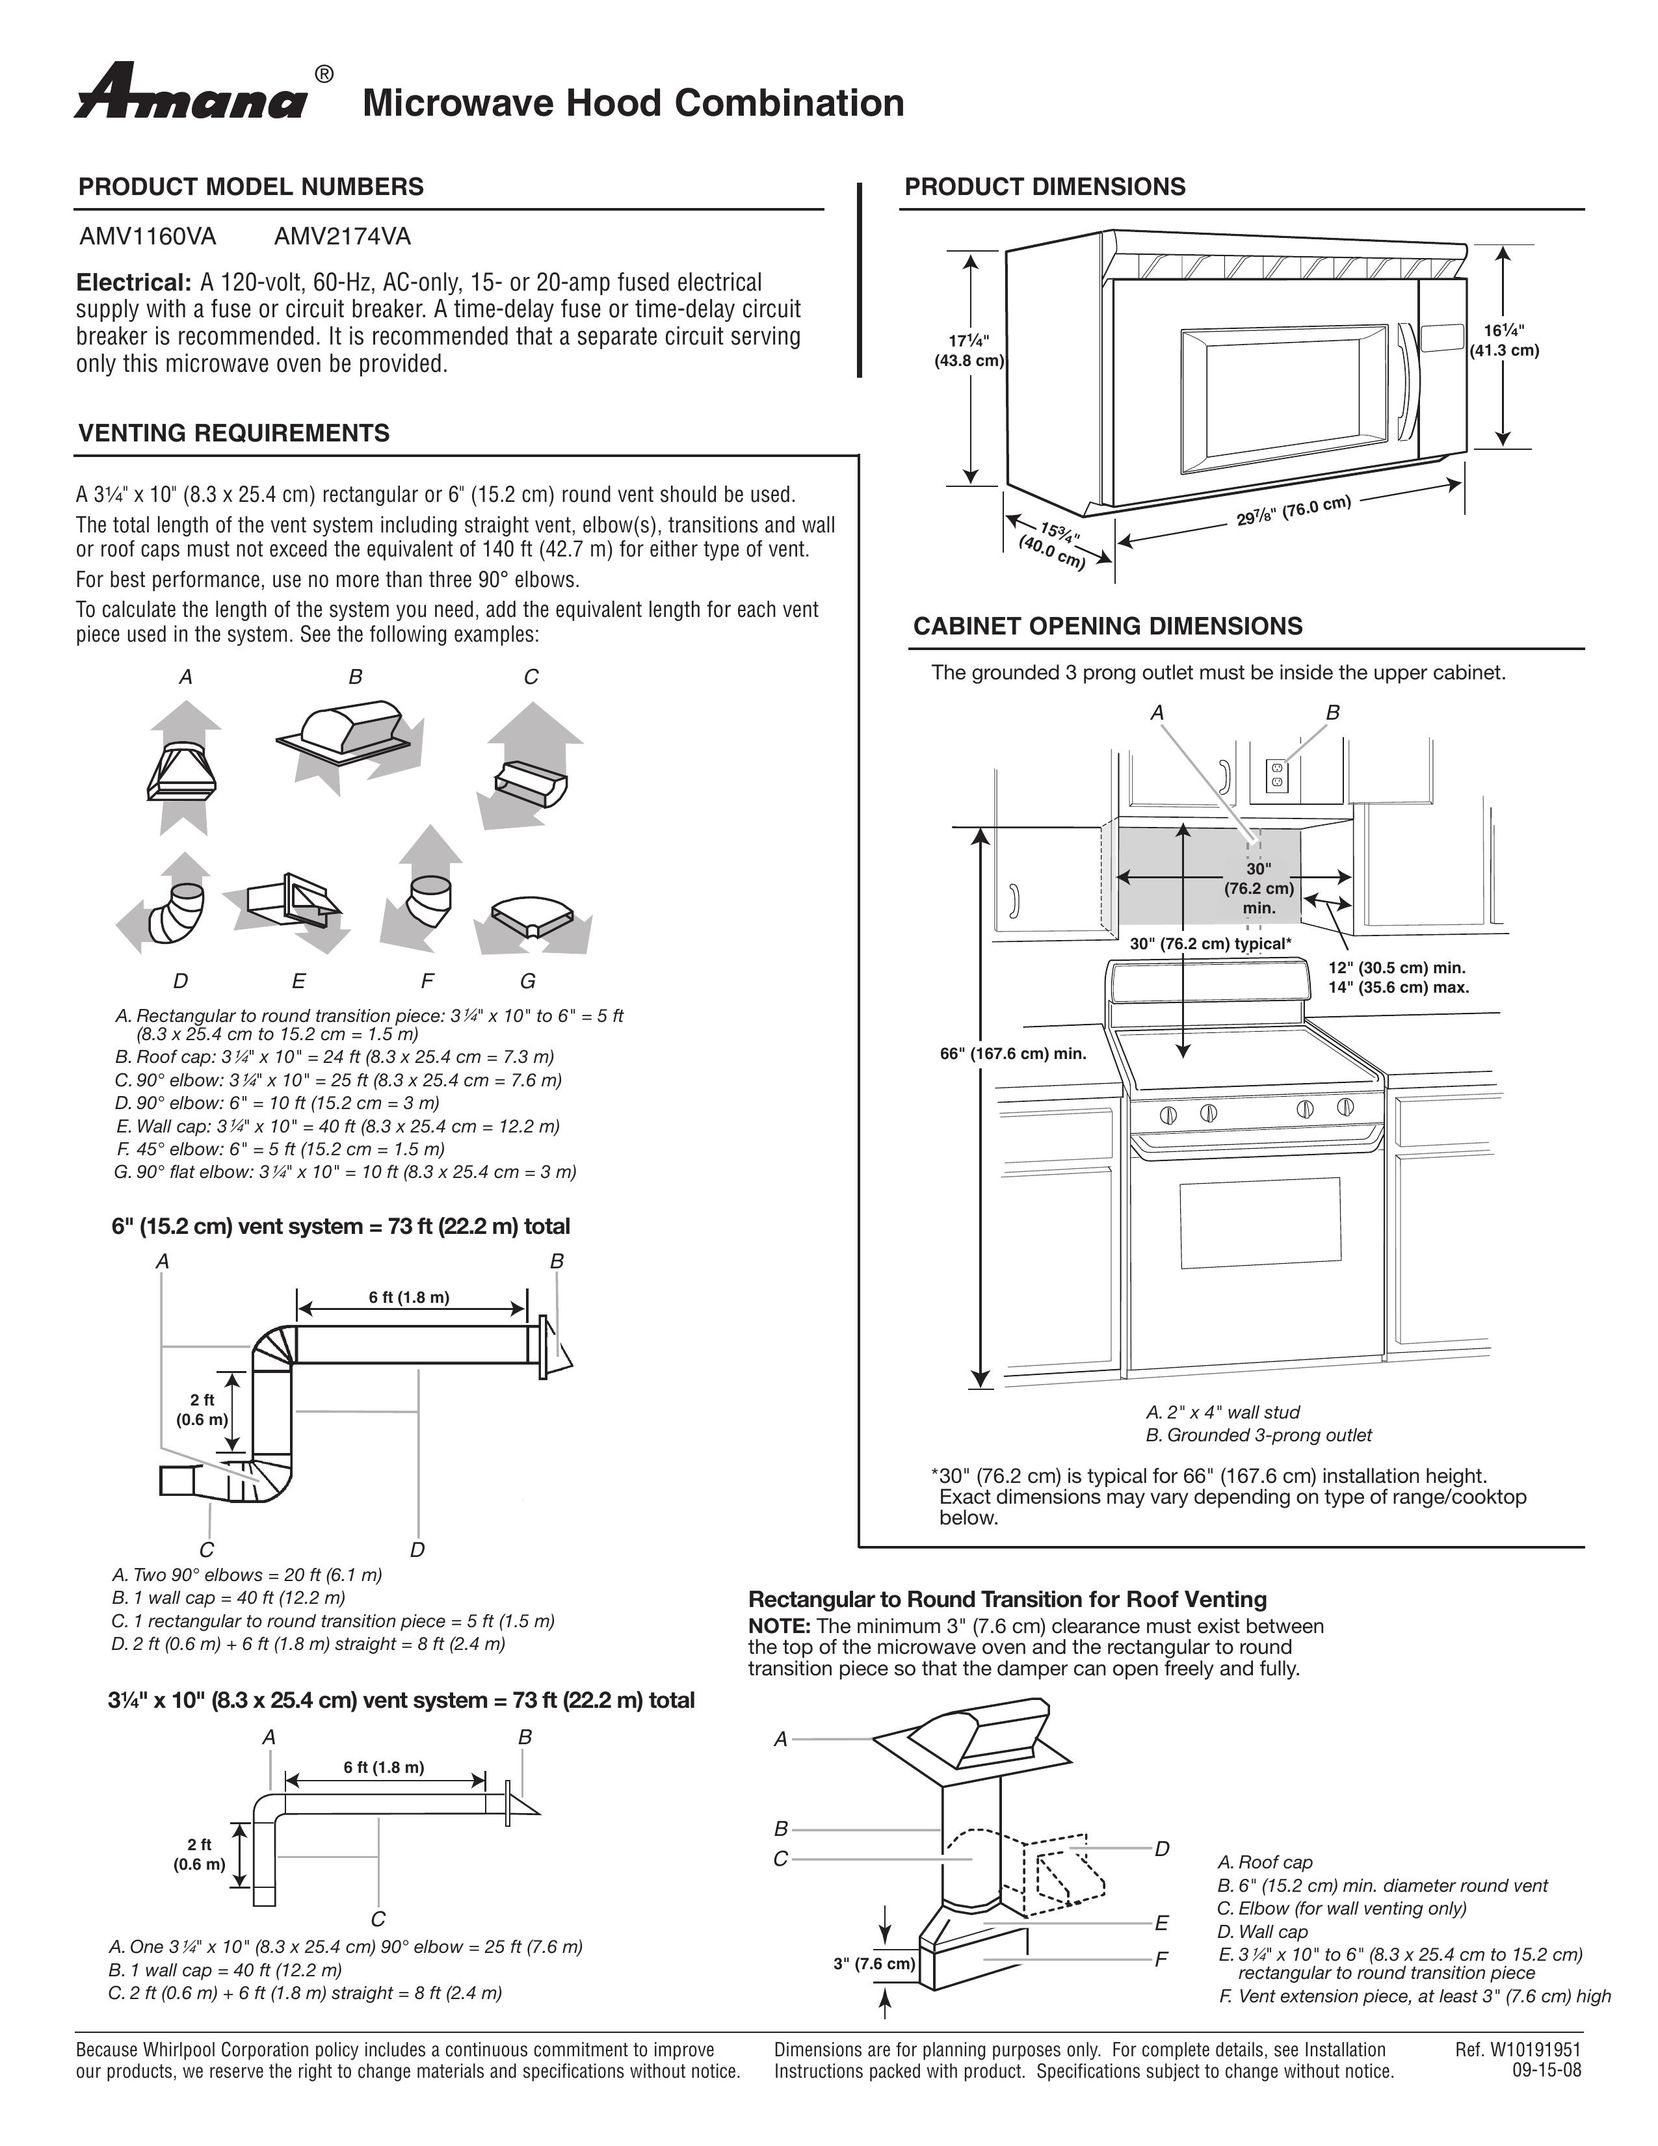 Amana AMV2174VA Microwave Oven User Manual